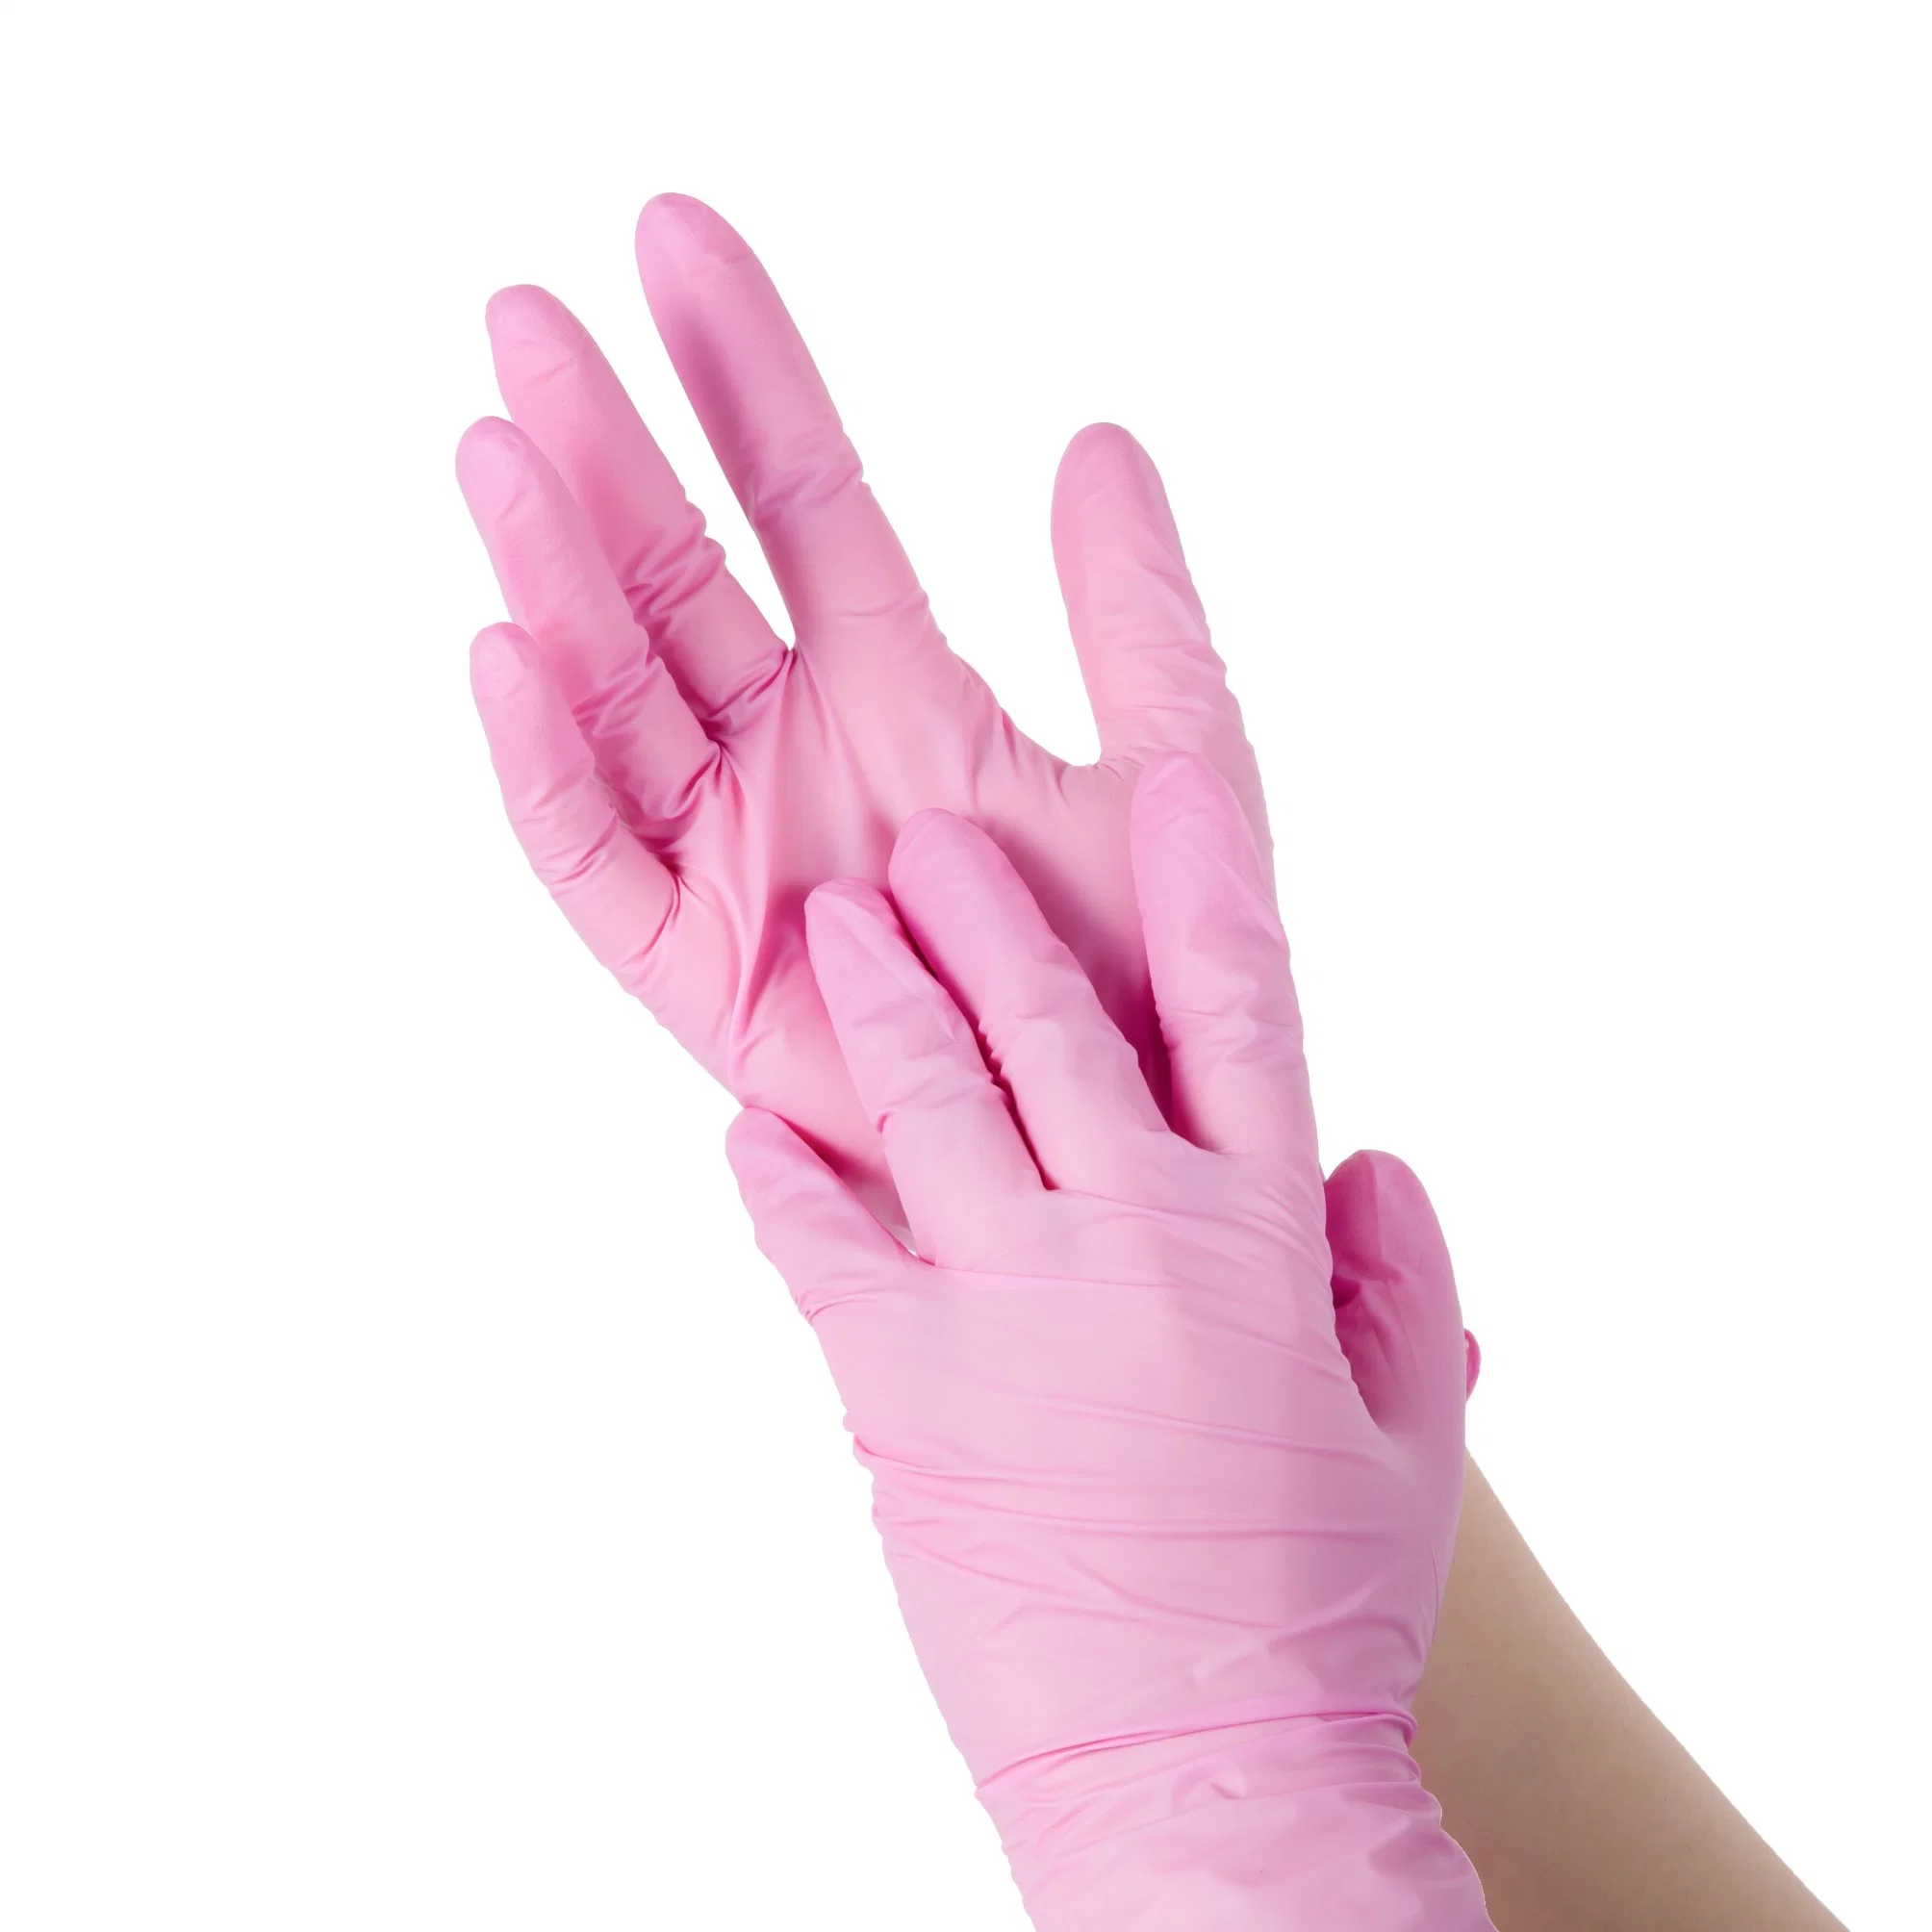 Disposable Medical Examination Light Red Nitrile Glove Powder Free